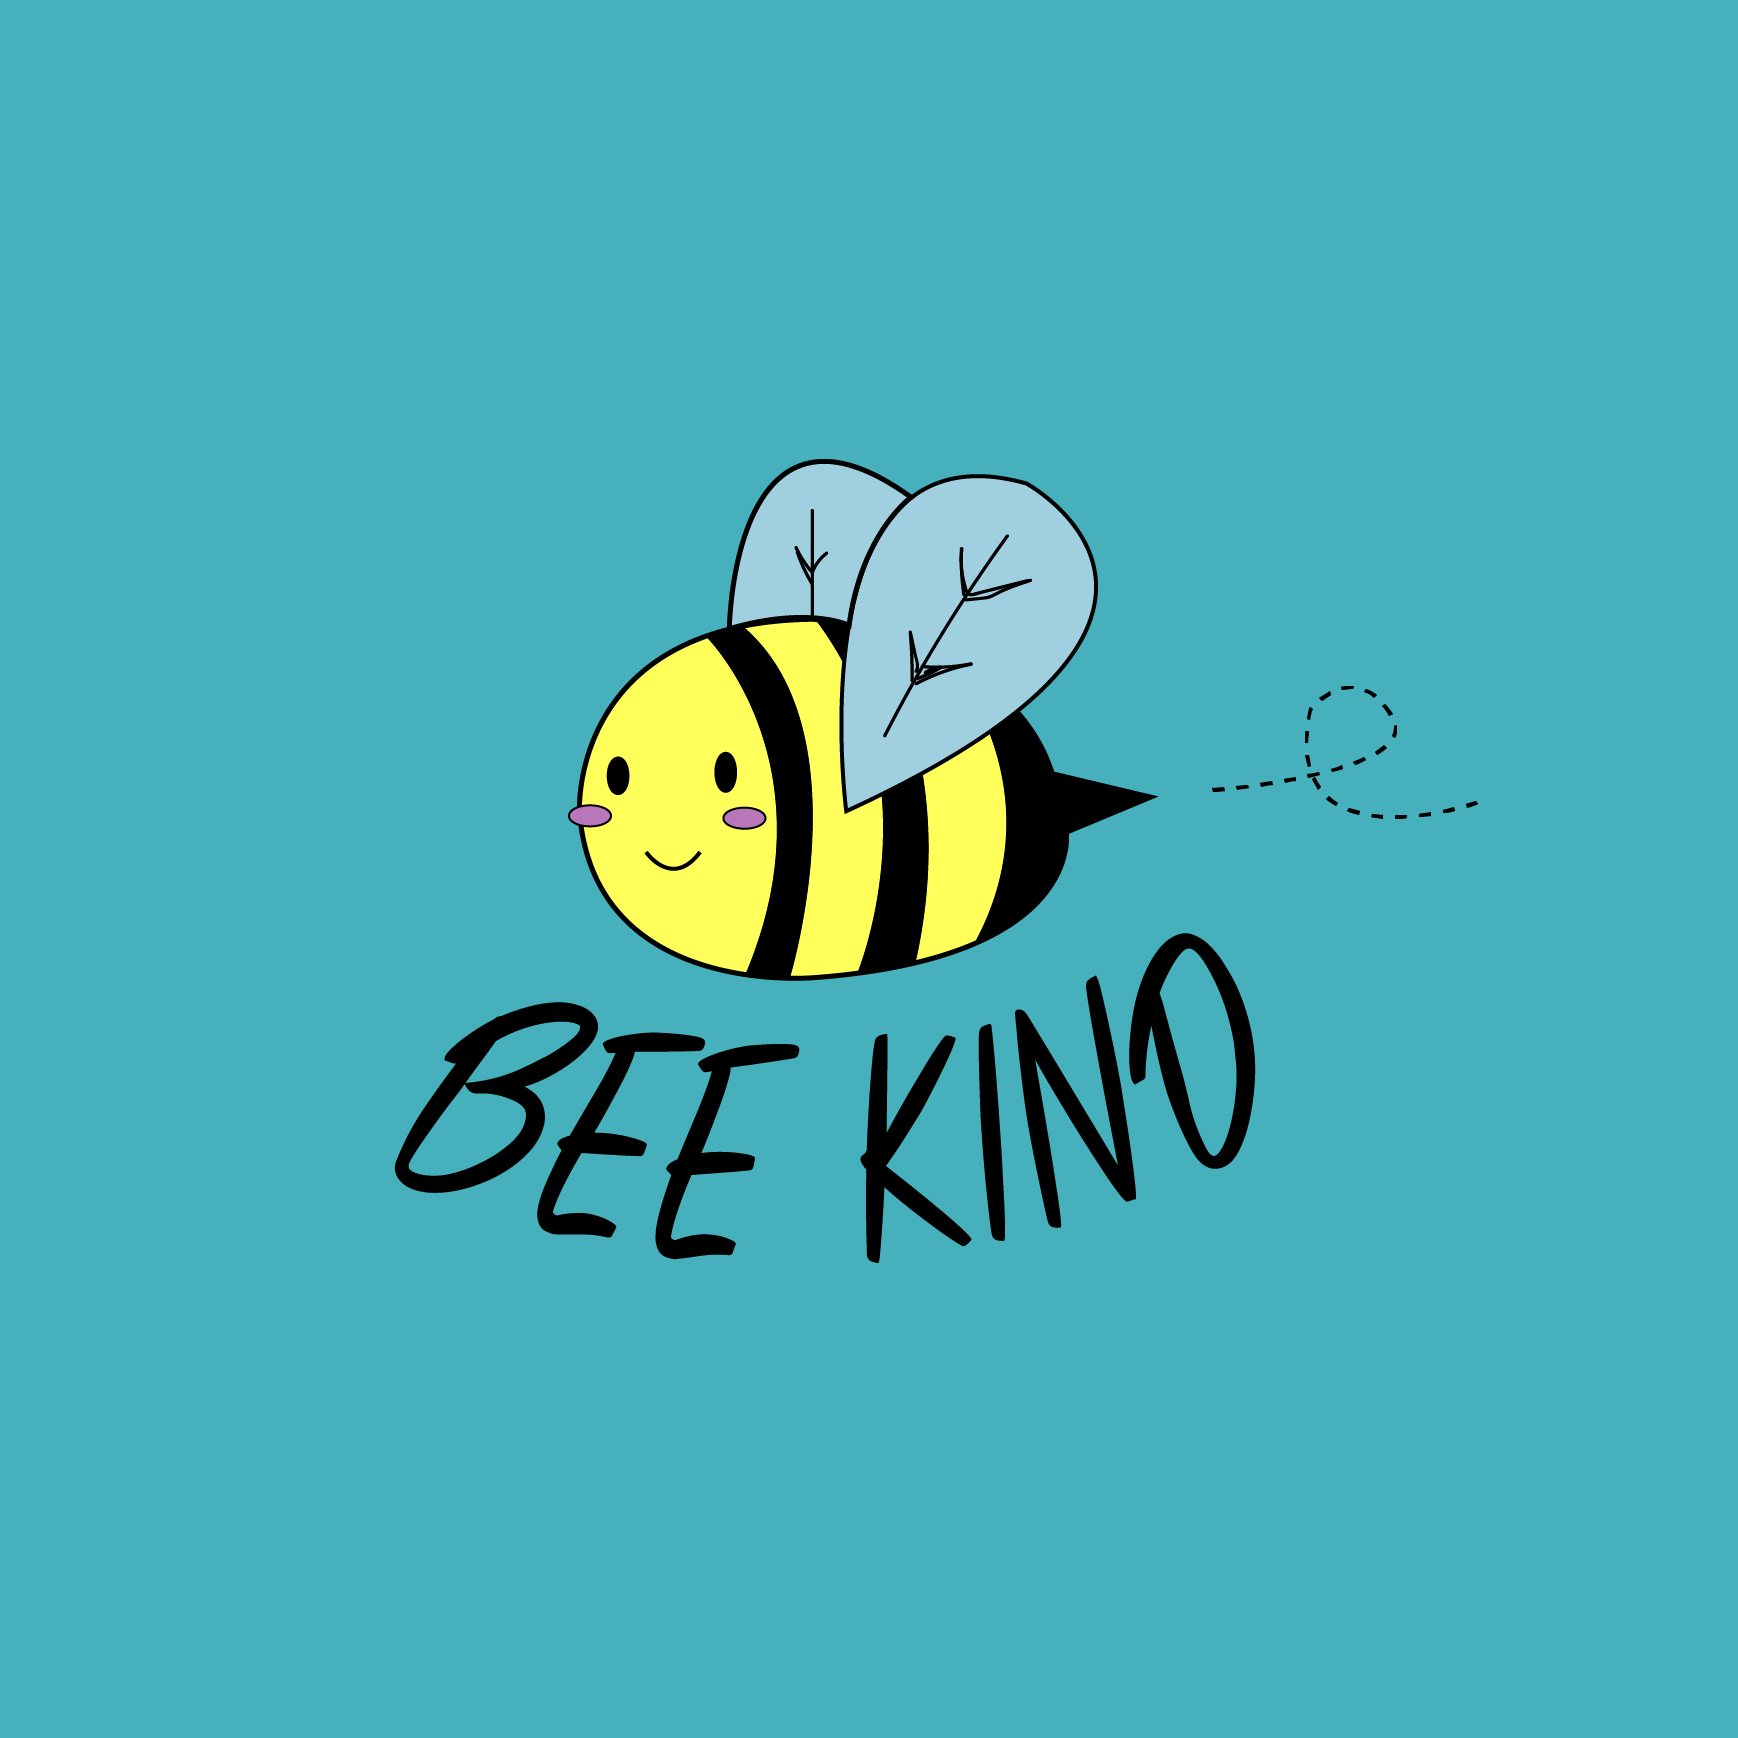 Bee Kind - Organic Cotton Tote Bag - Oat Milk Club